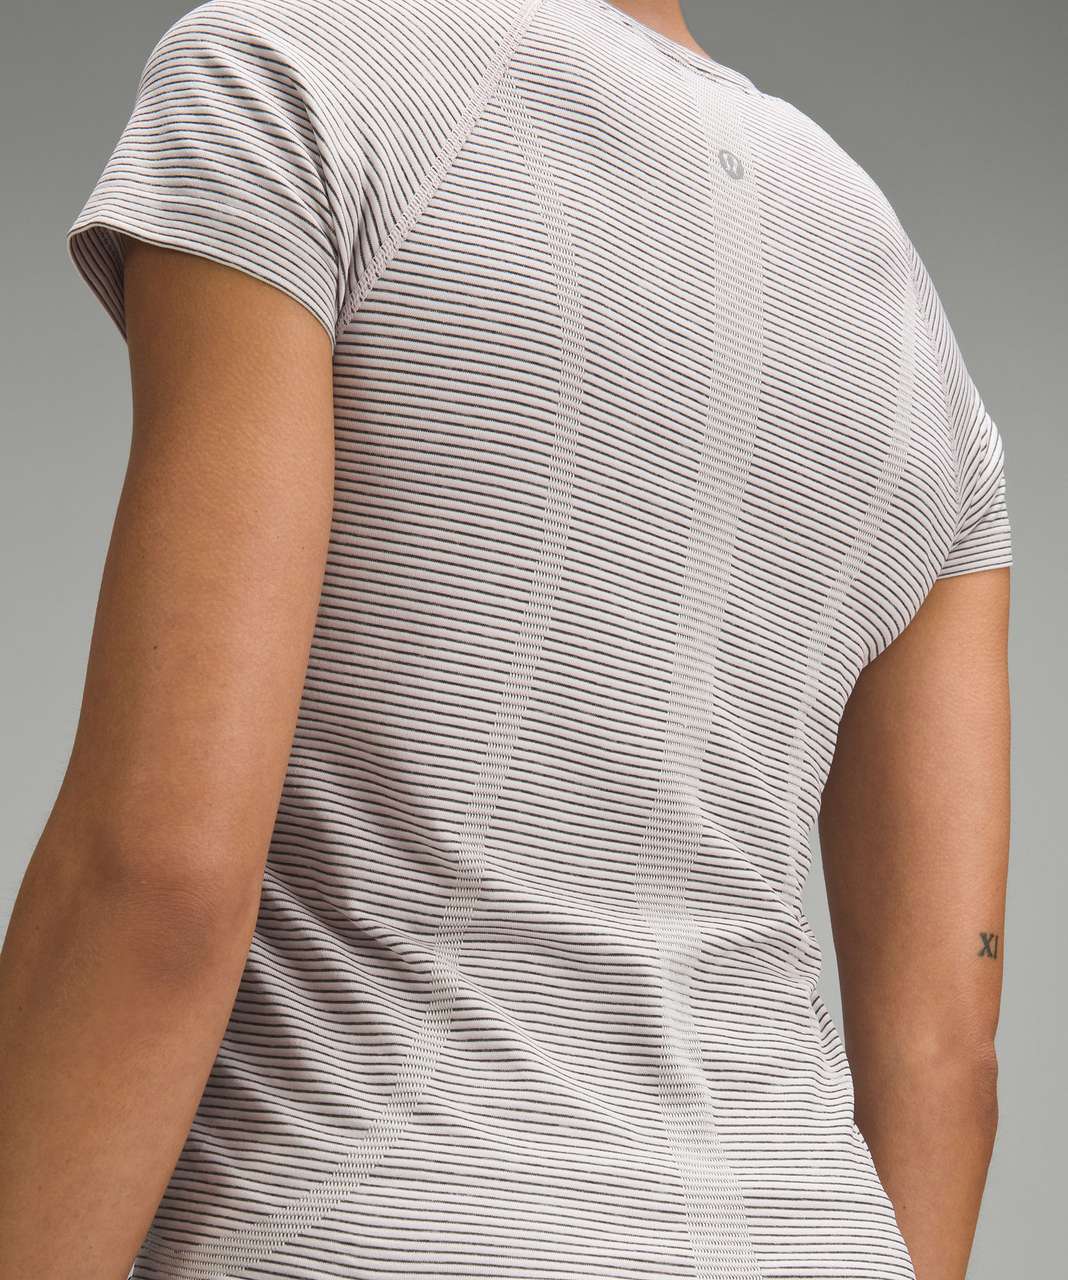 Lululemon Swiftly Tech Short-Sleeve Shirt 2.0 - Tetra Stripe Vapor / Black / Velvet Dust / Pink Peony